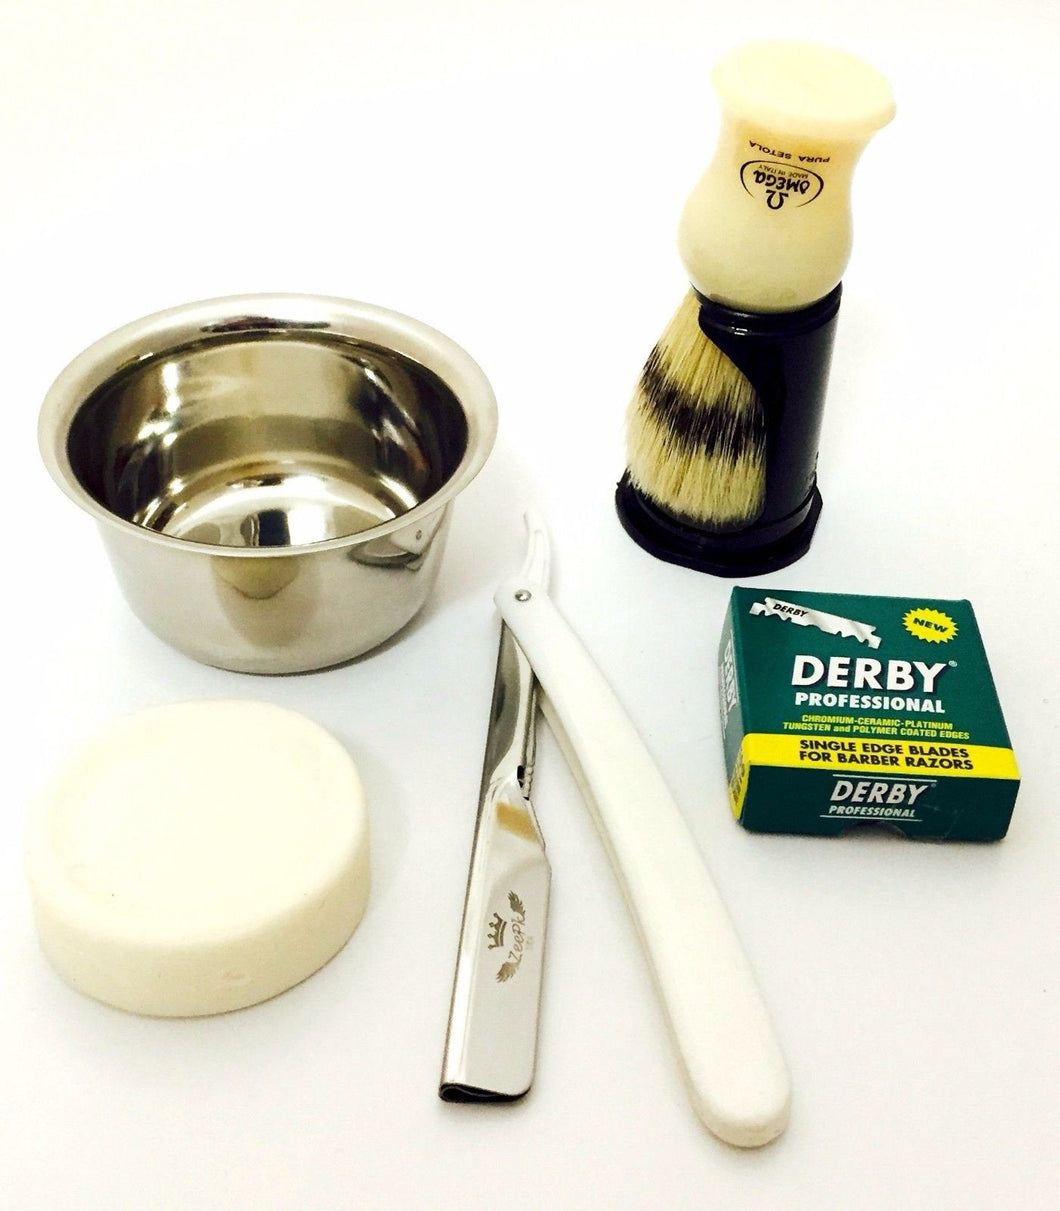 5 Pcs Cut Throat Shavette Razor, Cup, Brush, Soap & 100 Derby Blades Set/kit - Liberty Beauty Supply